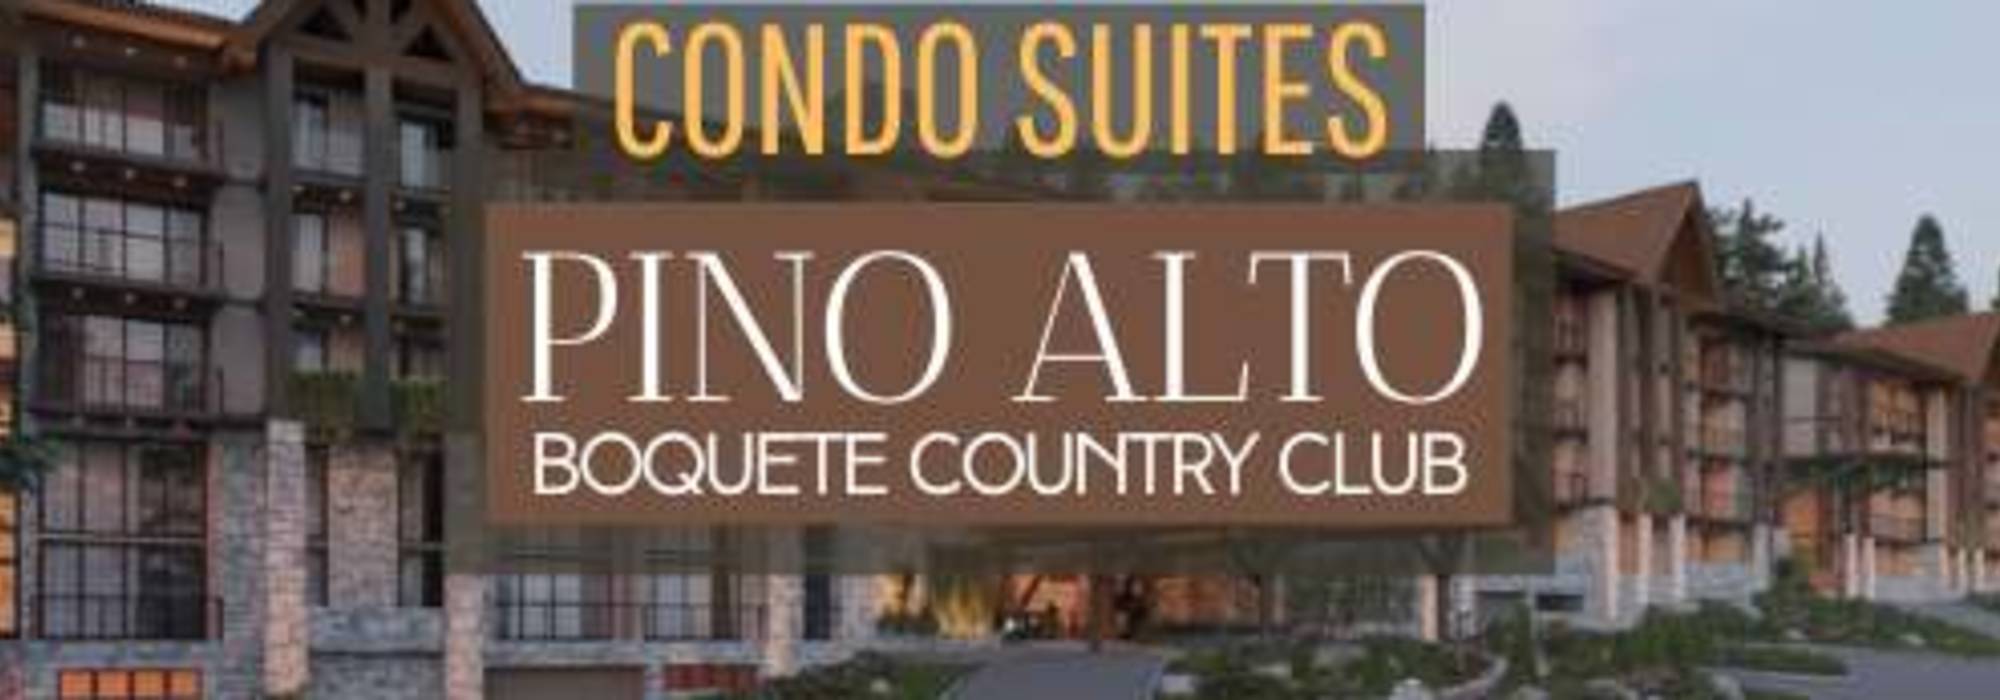 Pino Alto Boquete Country Club - Condo Suites